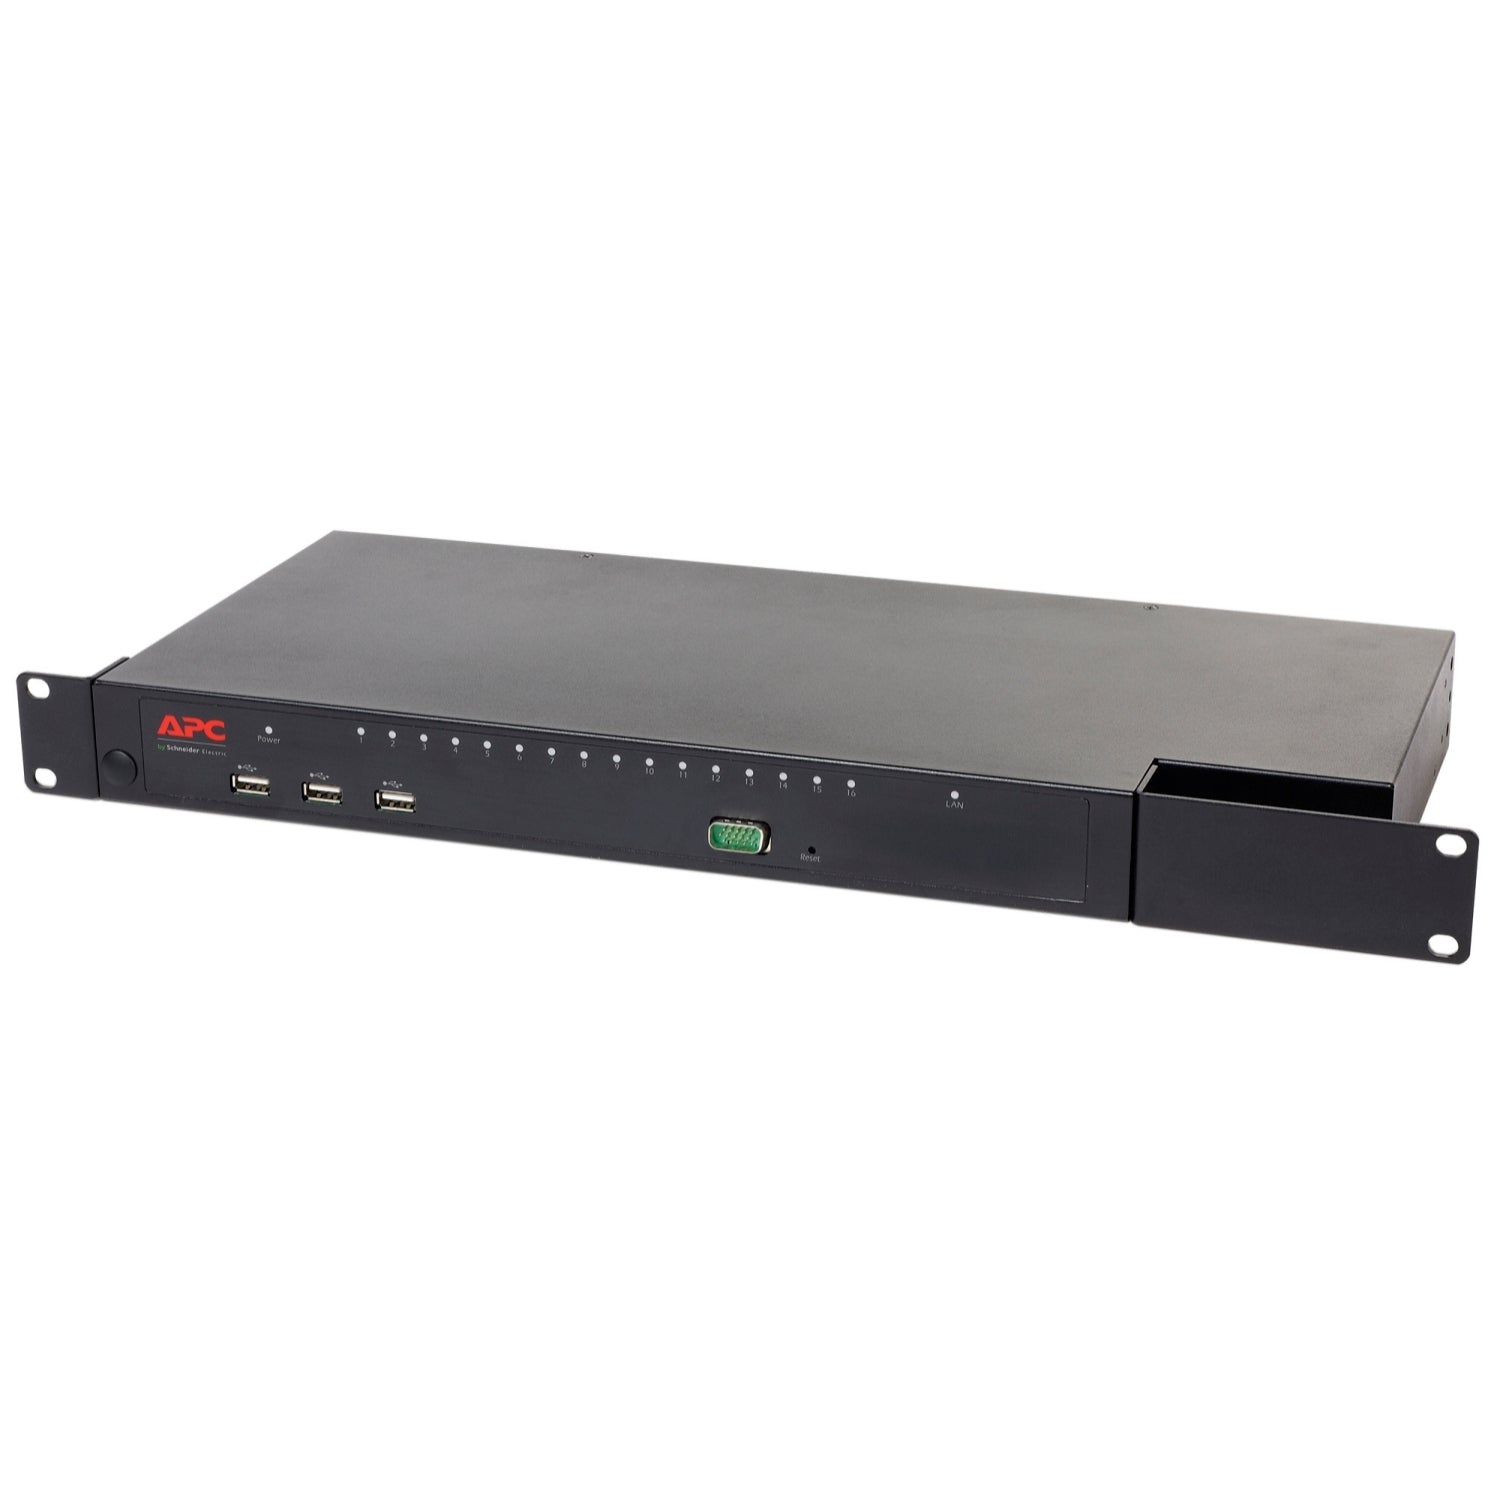 Switch APC KVM 2G Digital IP, 16 Port